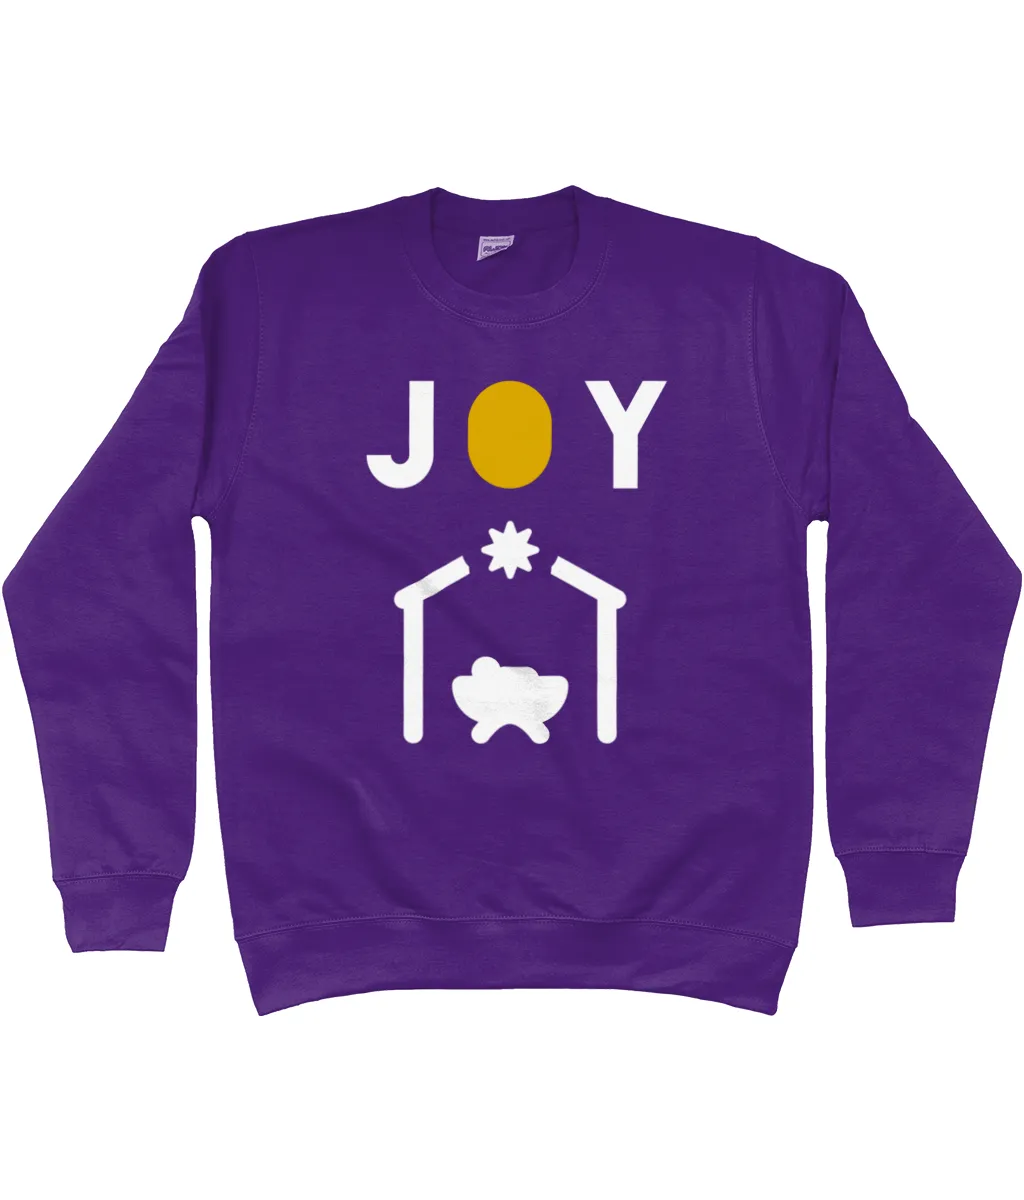 The 'Joy' kids Sweater